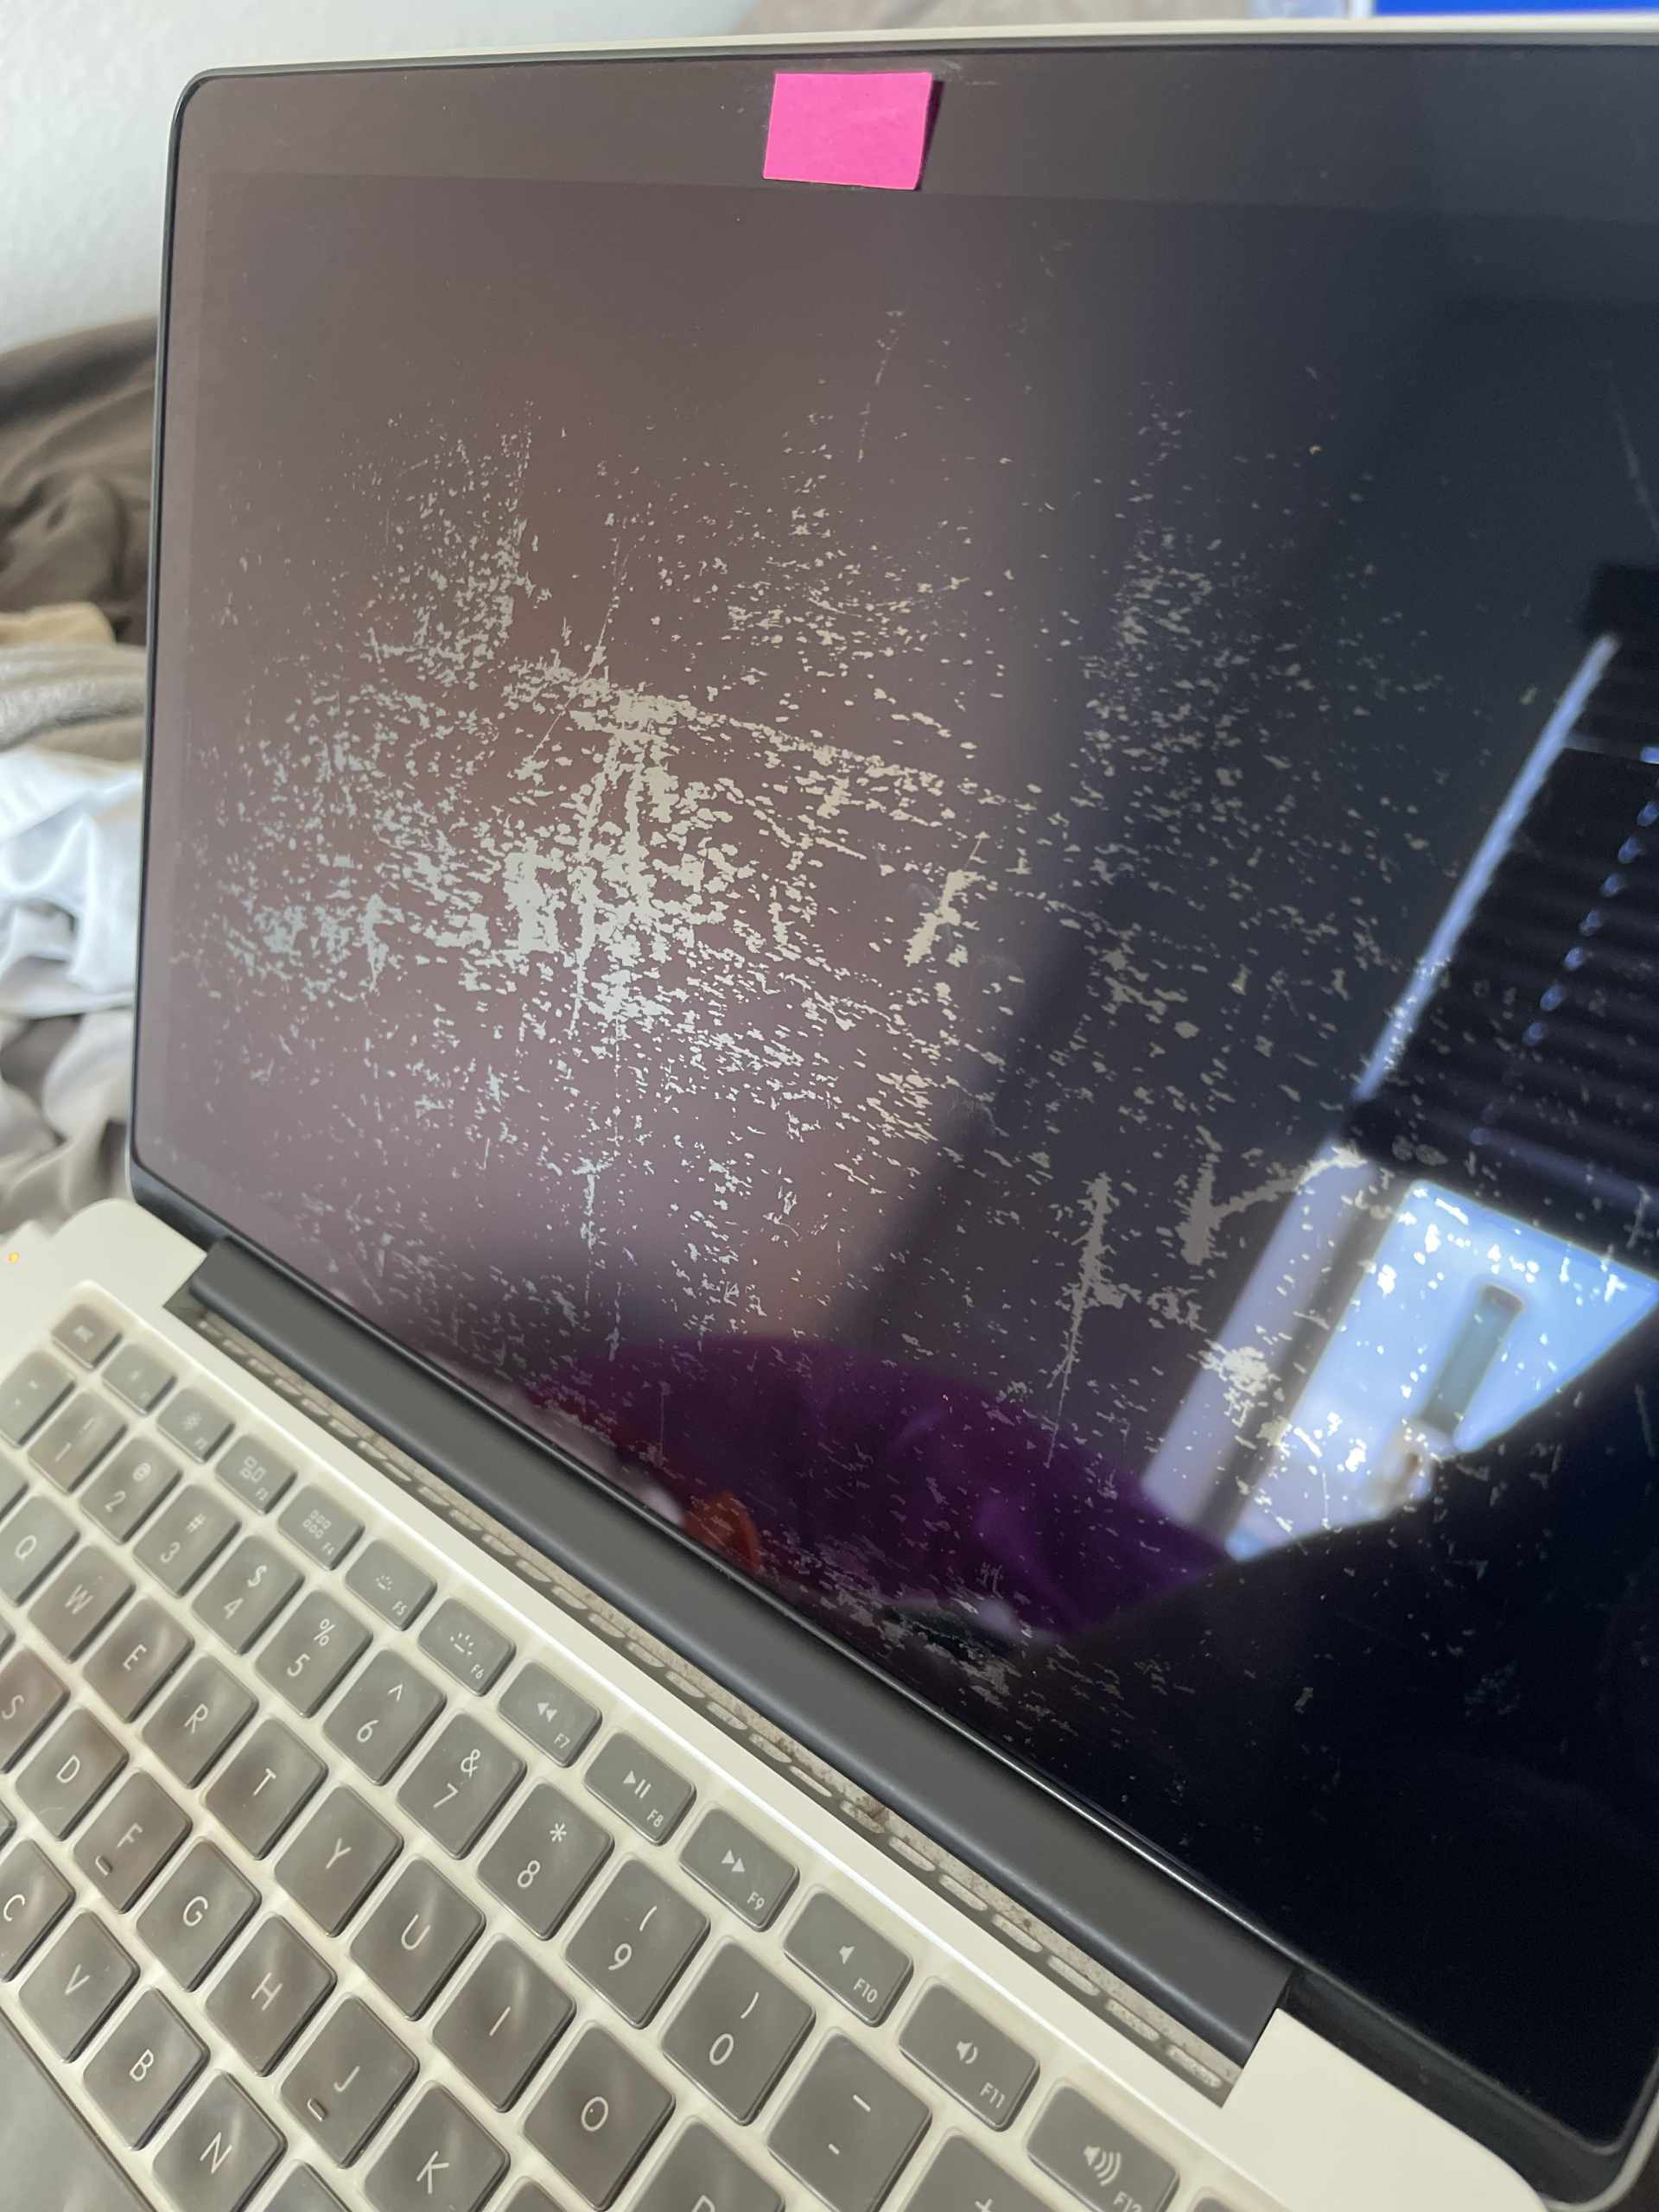 How to clean macbook screen